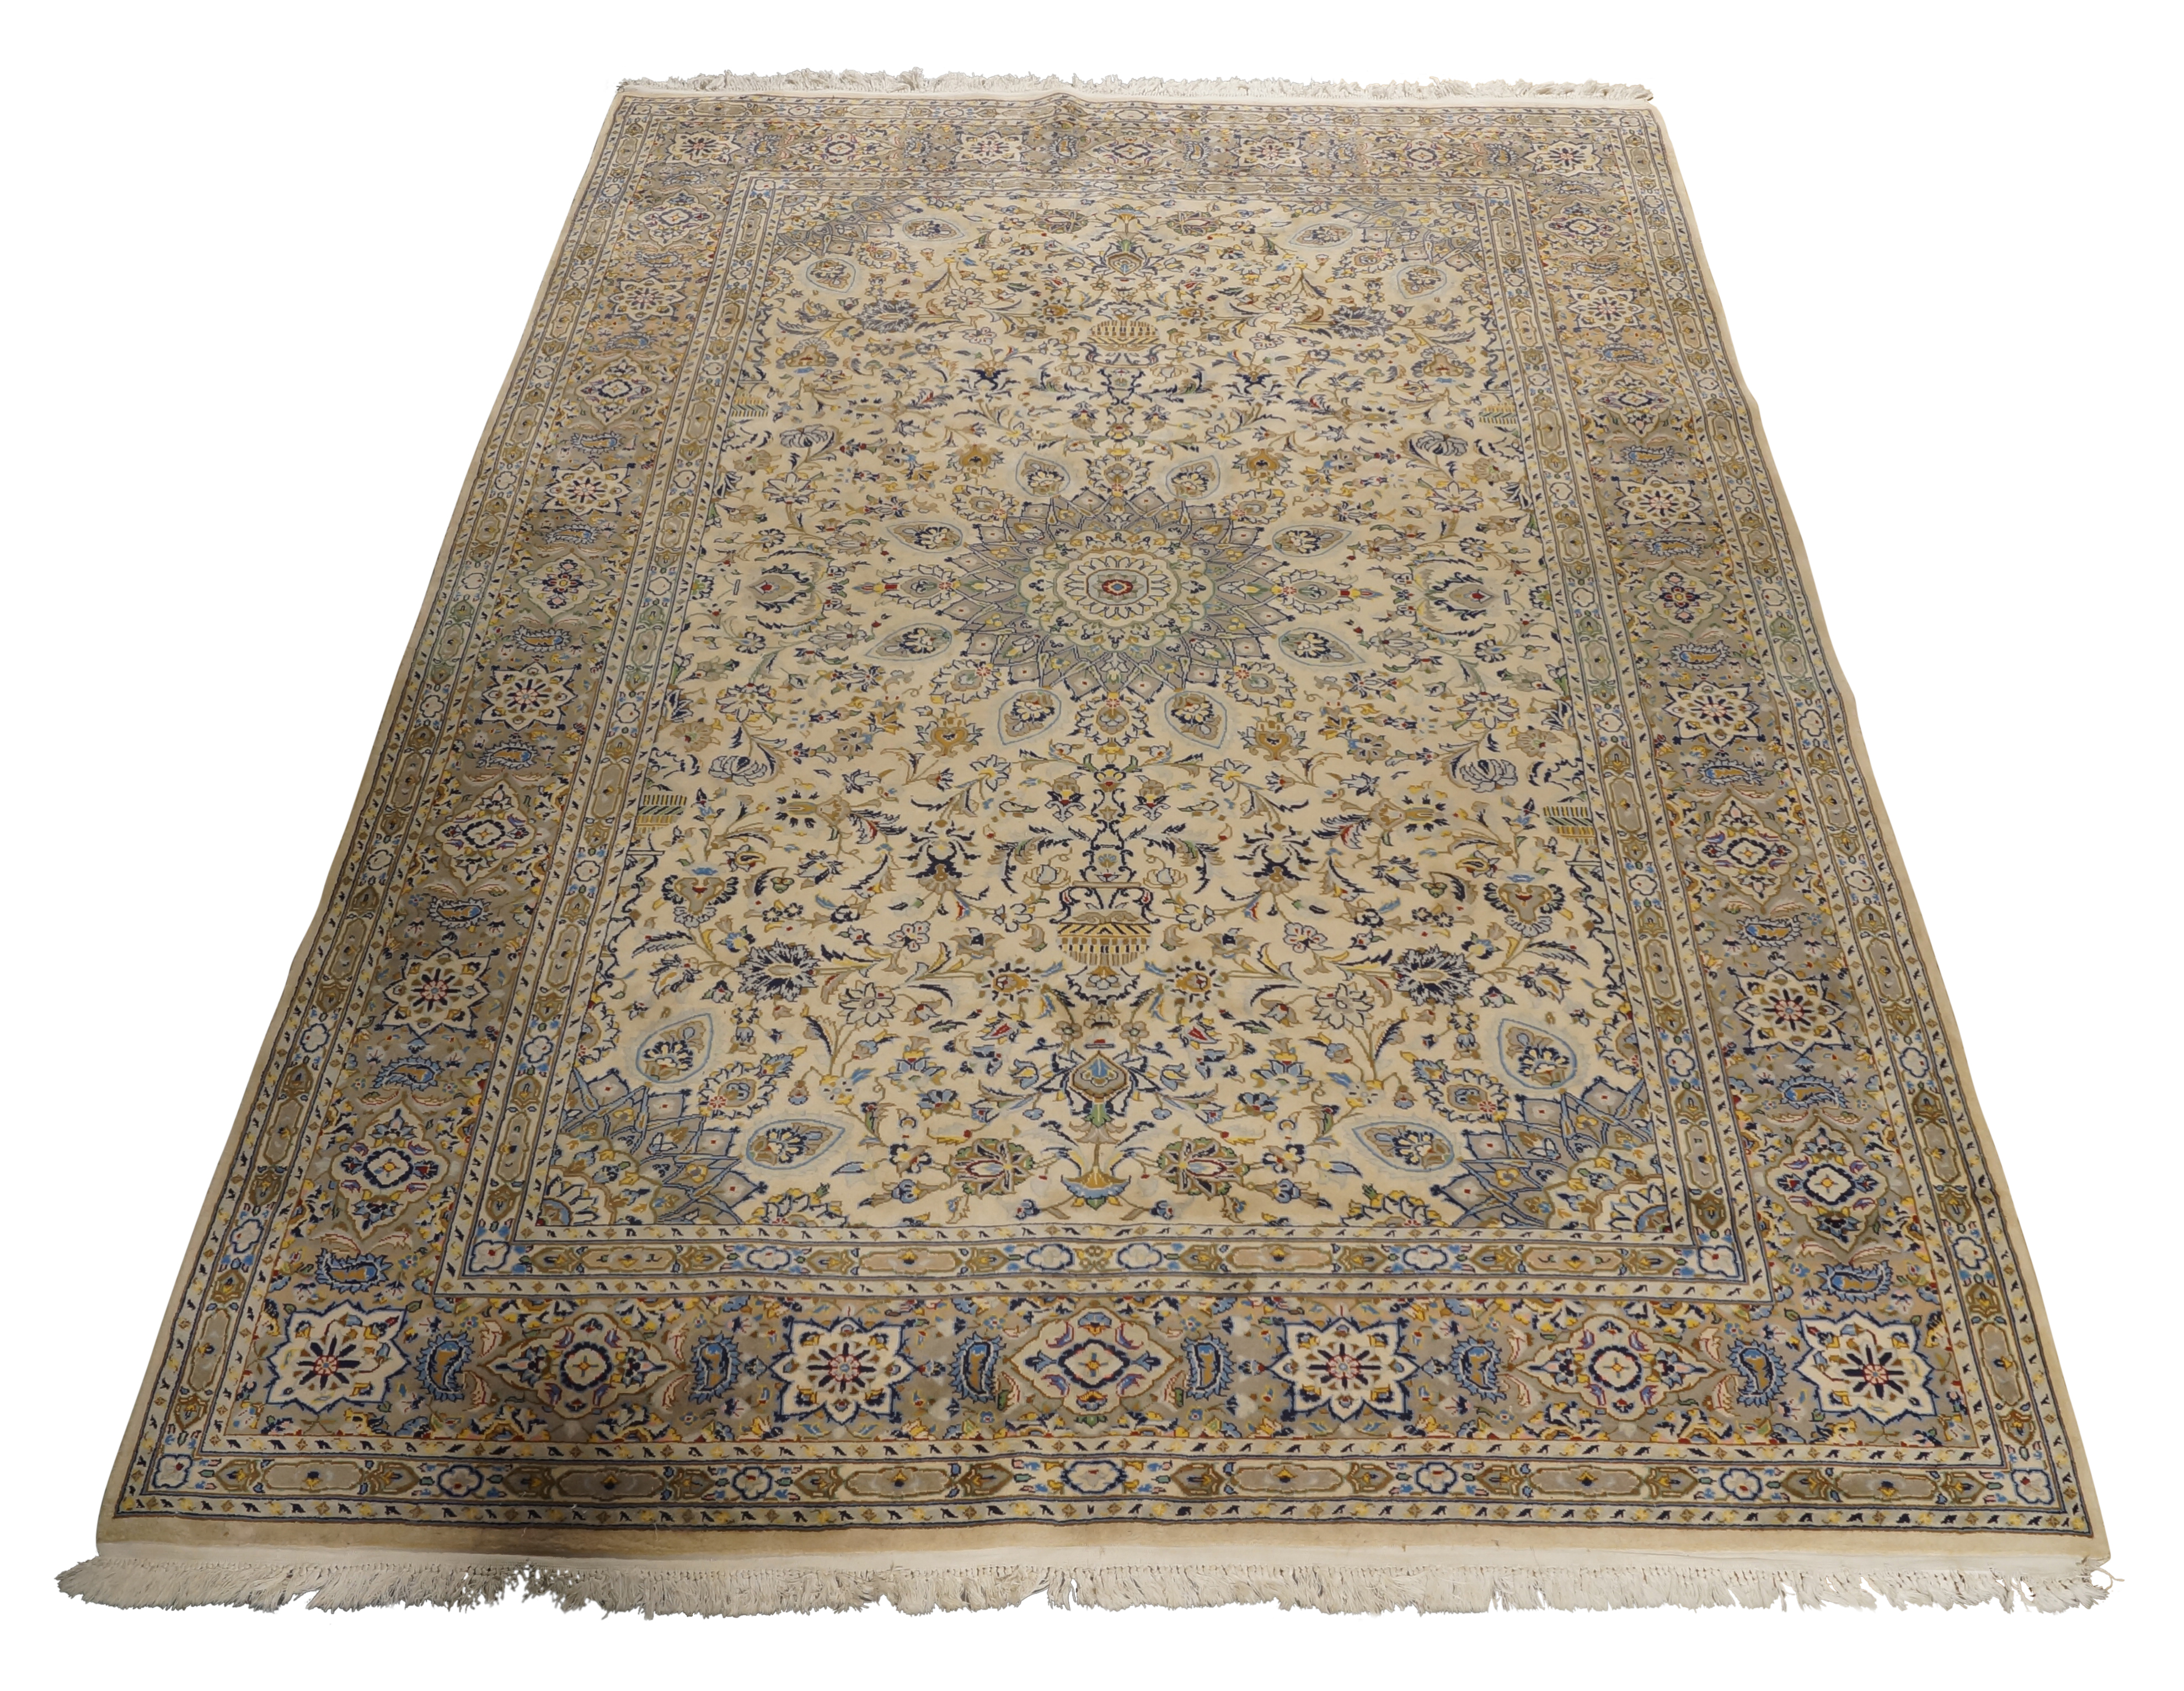 A Persian Kashan carpet